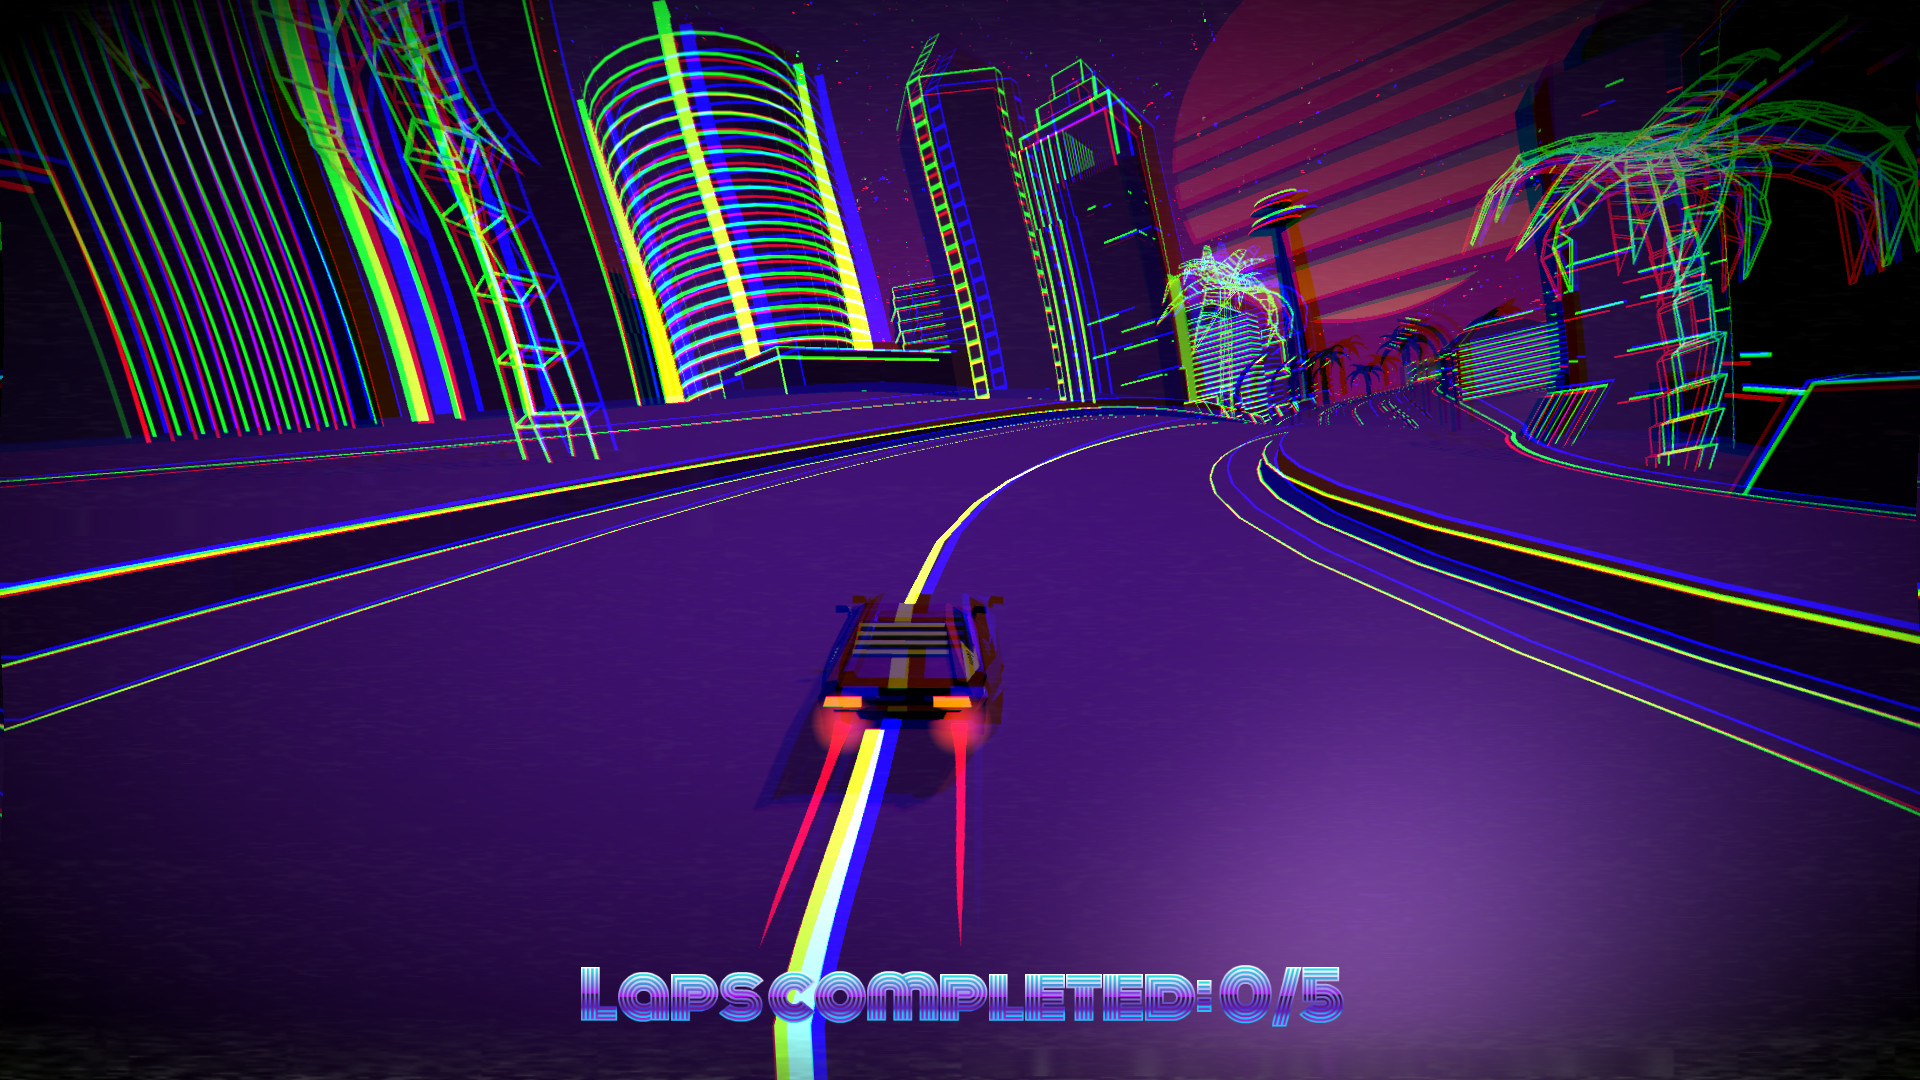 Retro Racer screenshot